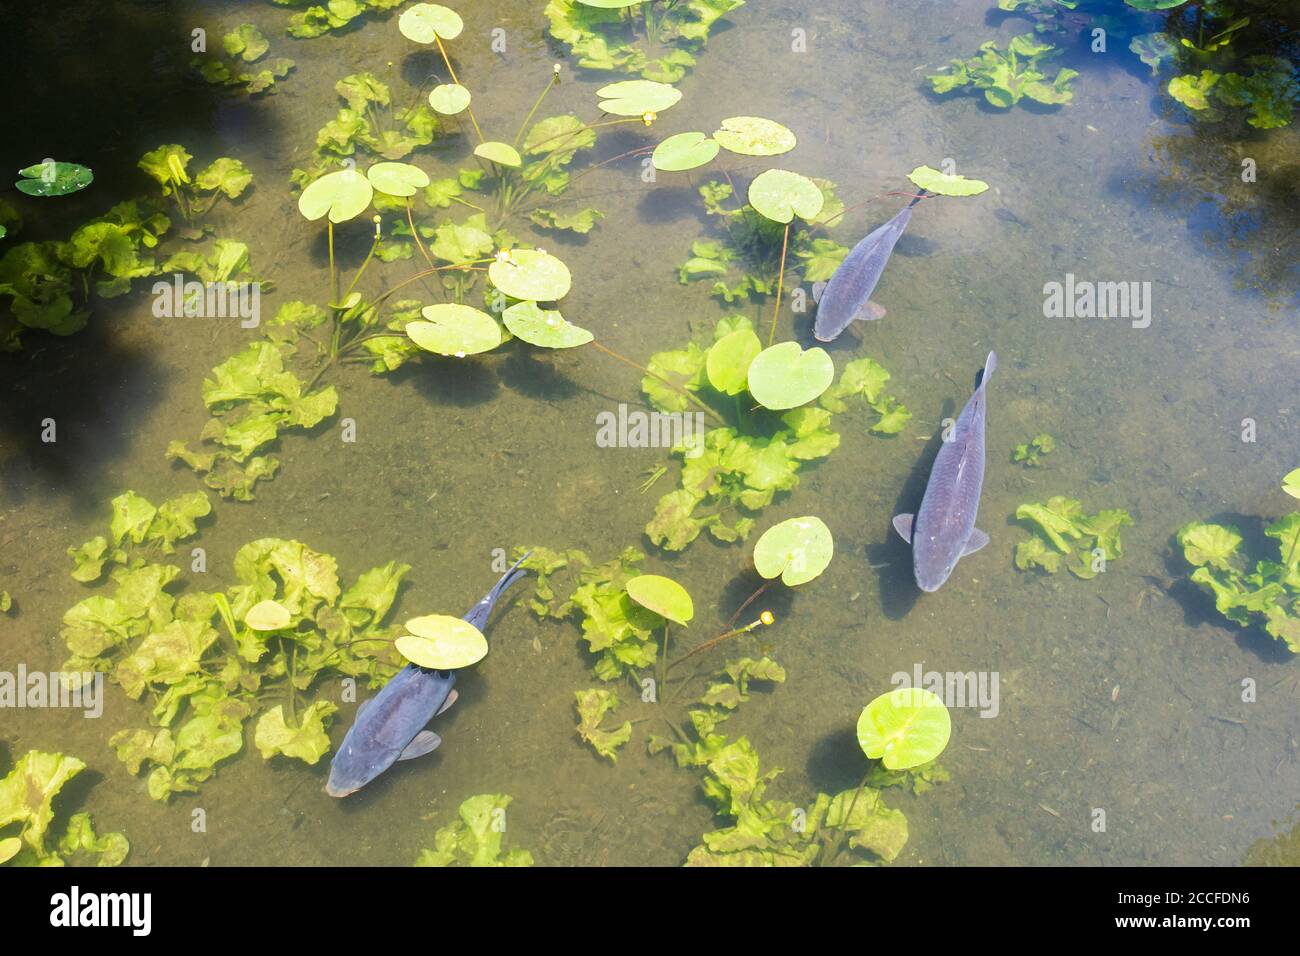 Vienna, common carp or European carp (Cyprinus carpio) in oxbow lake, water plants in 22. Donaustadt, Wien, Austria Stock Photo